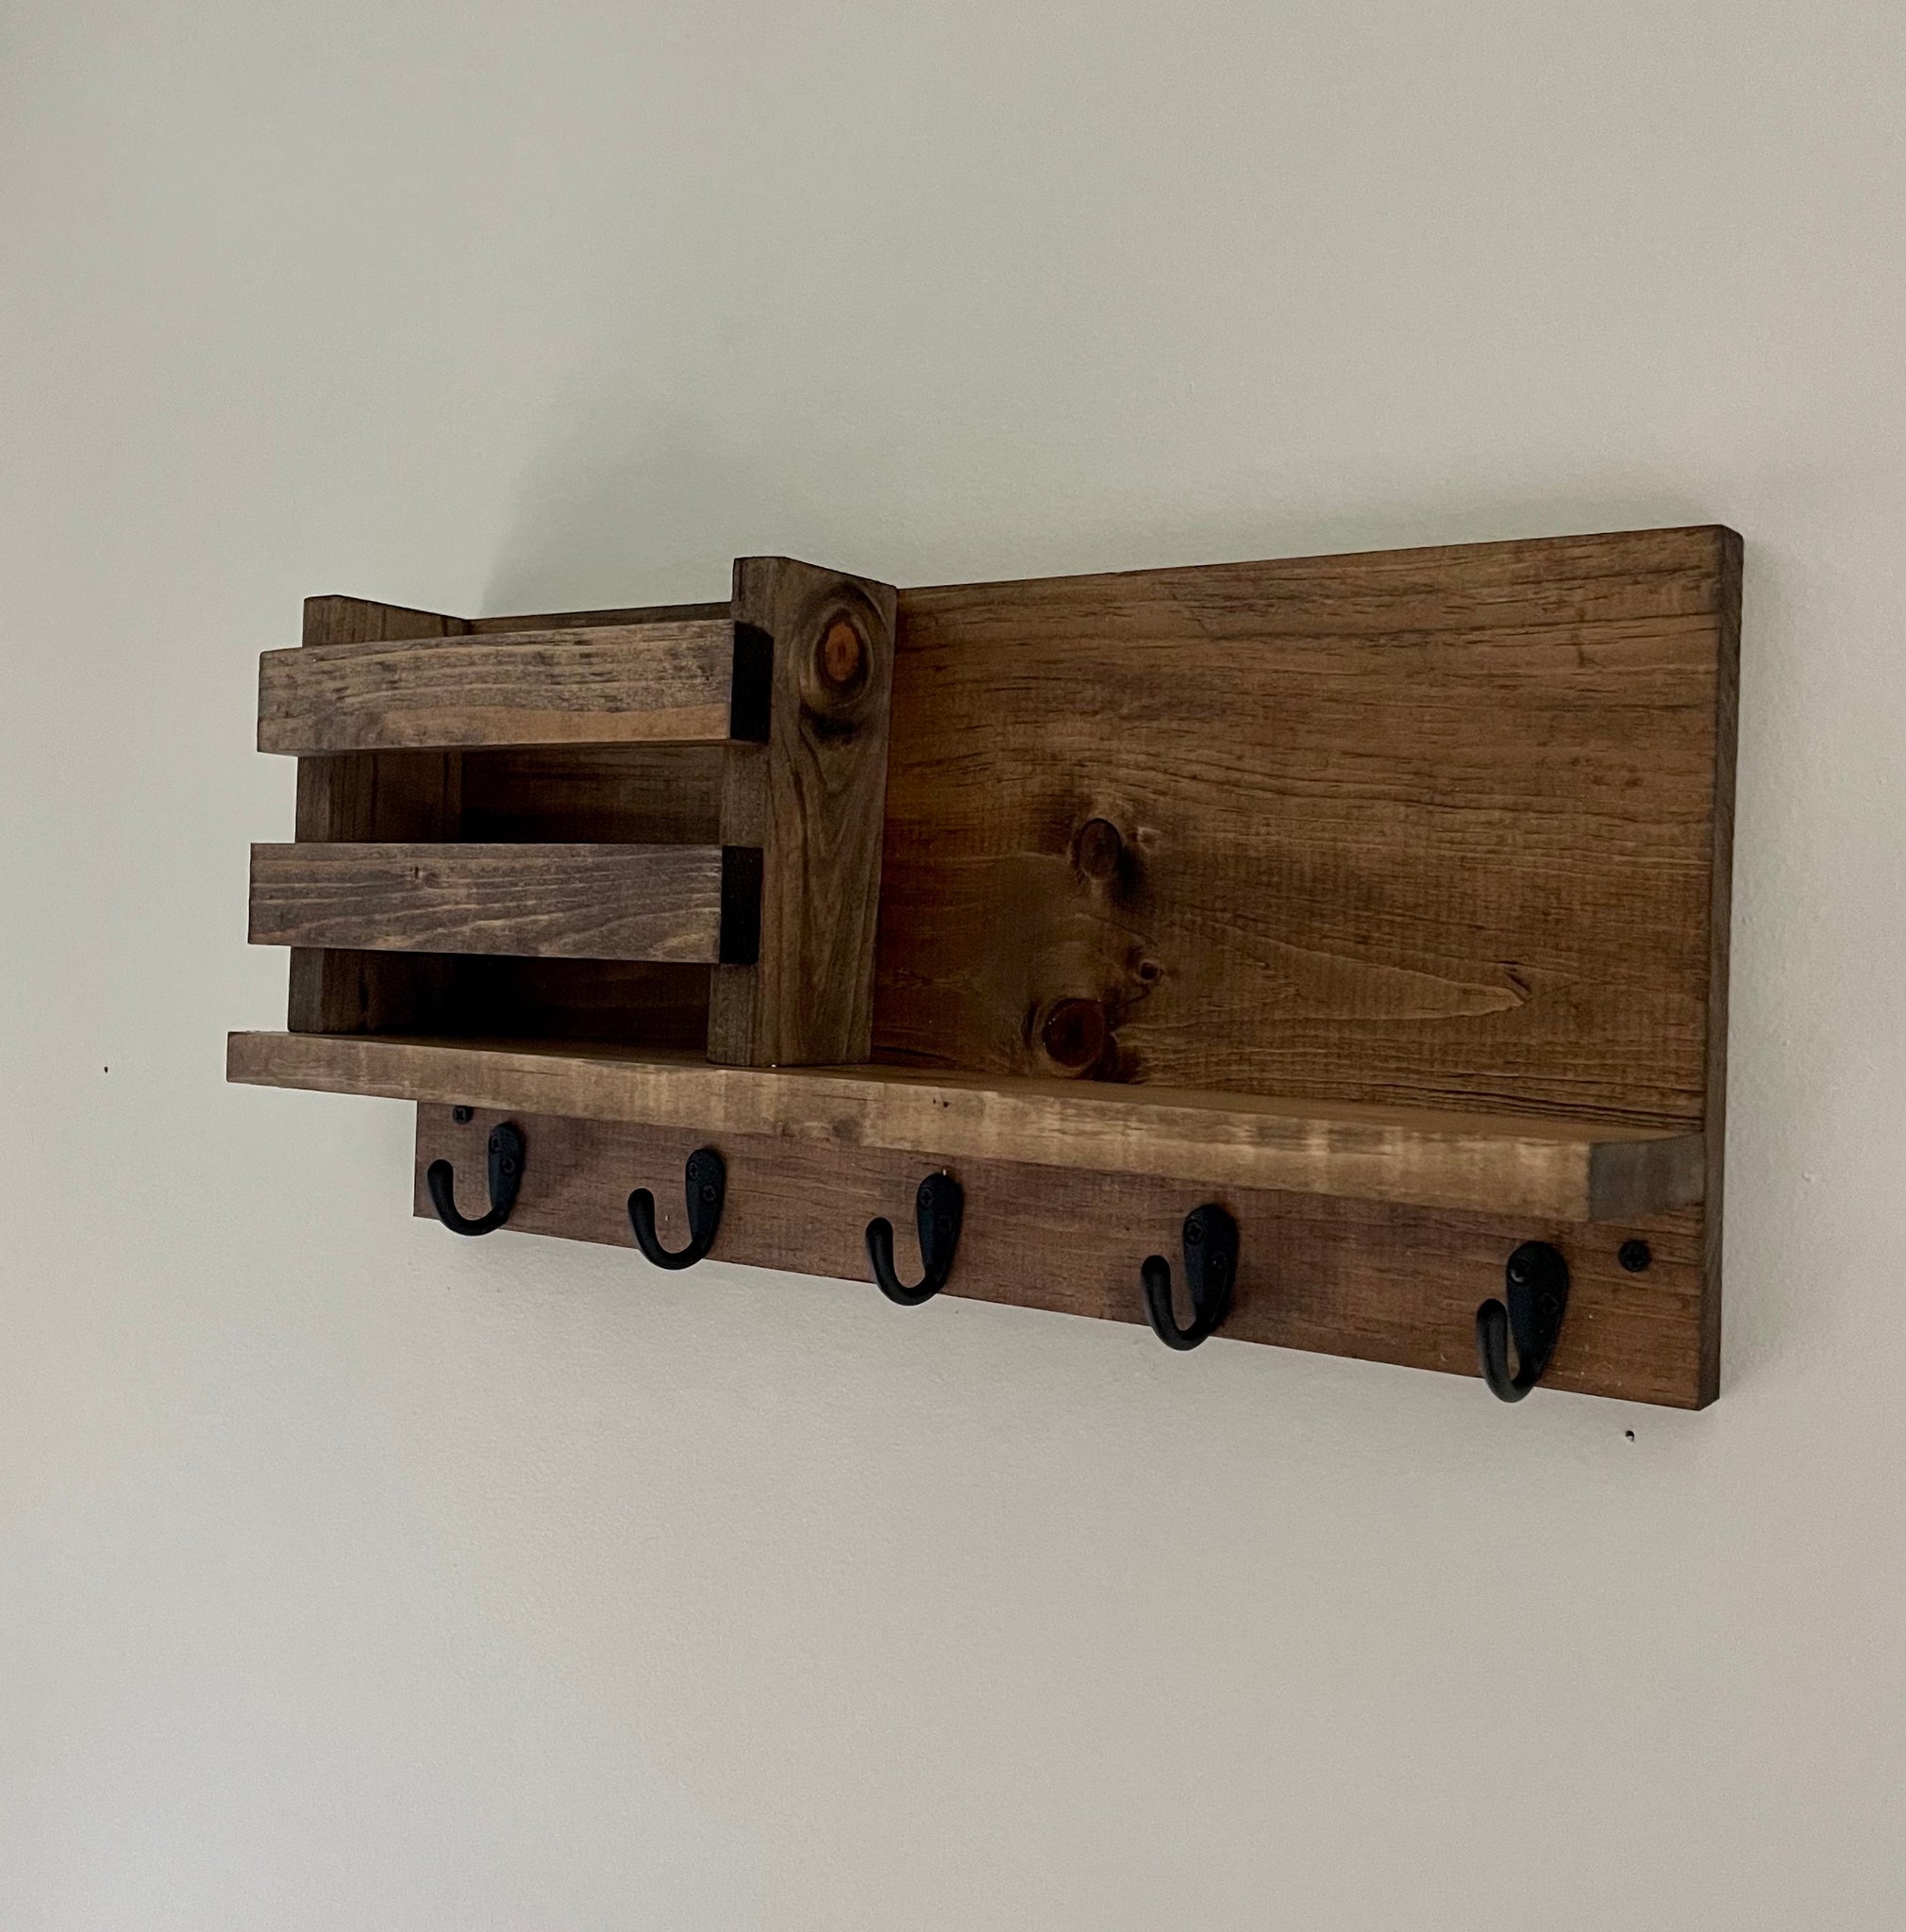 Wood Coat Hook Rack, Entryway Key Hook Shelf | Rustic | Modern | Farmhouse